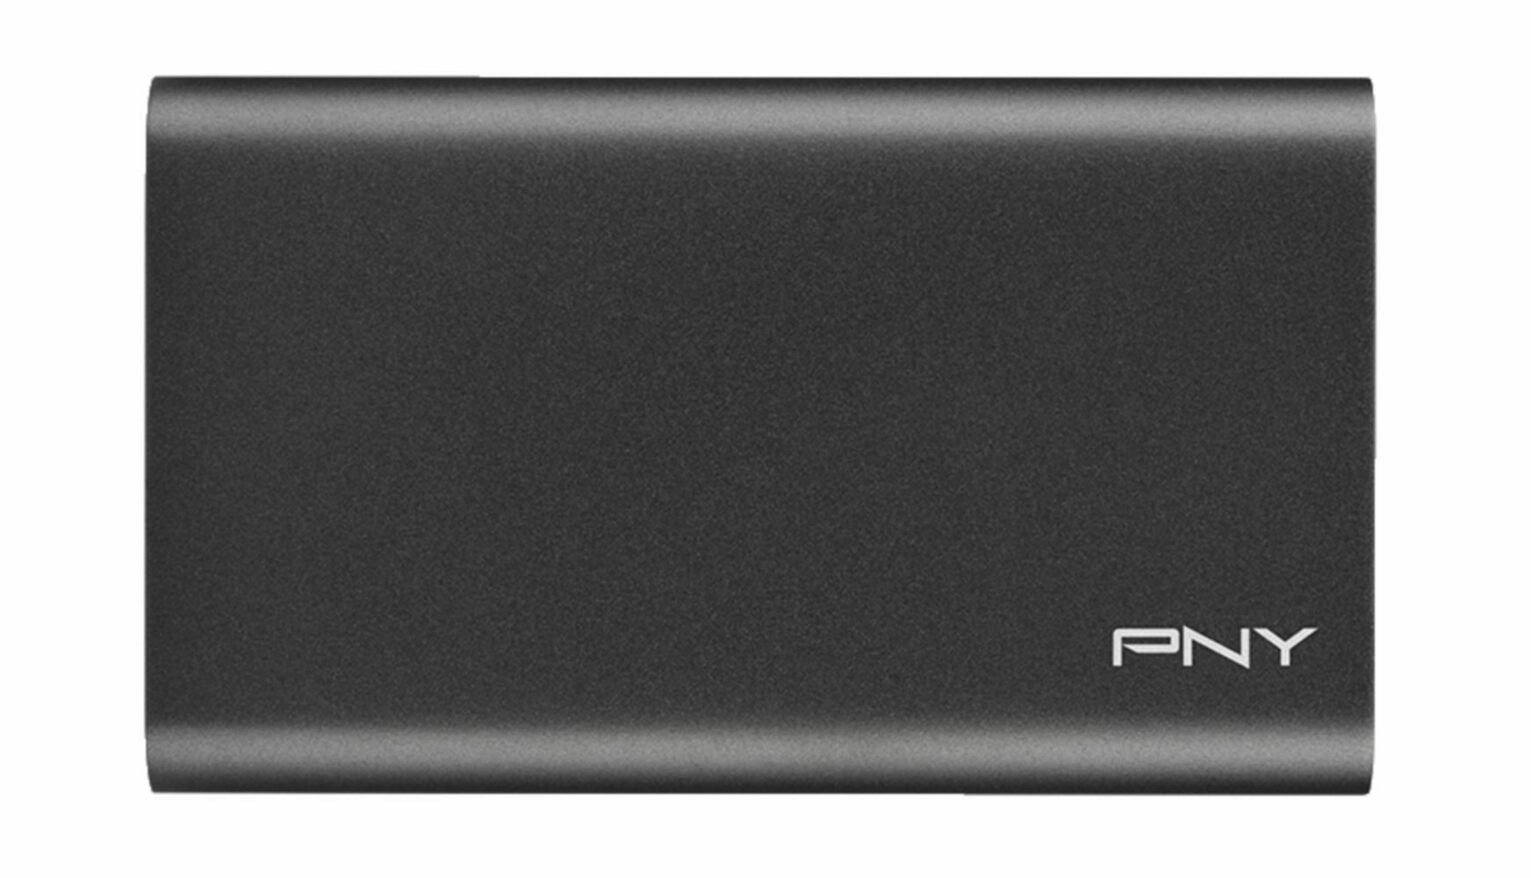 PNY Elite USB 3.1 Gen 1 960GB Portable SSD Hard Drive Review